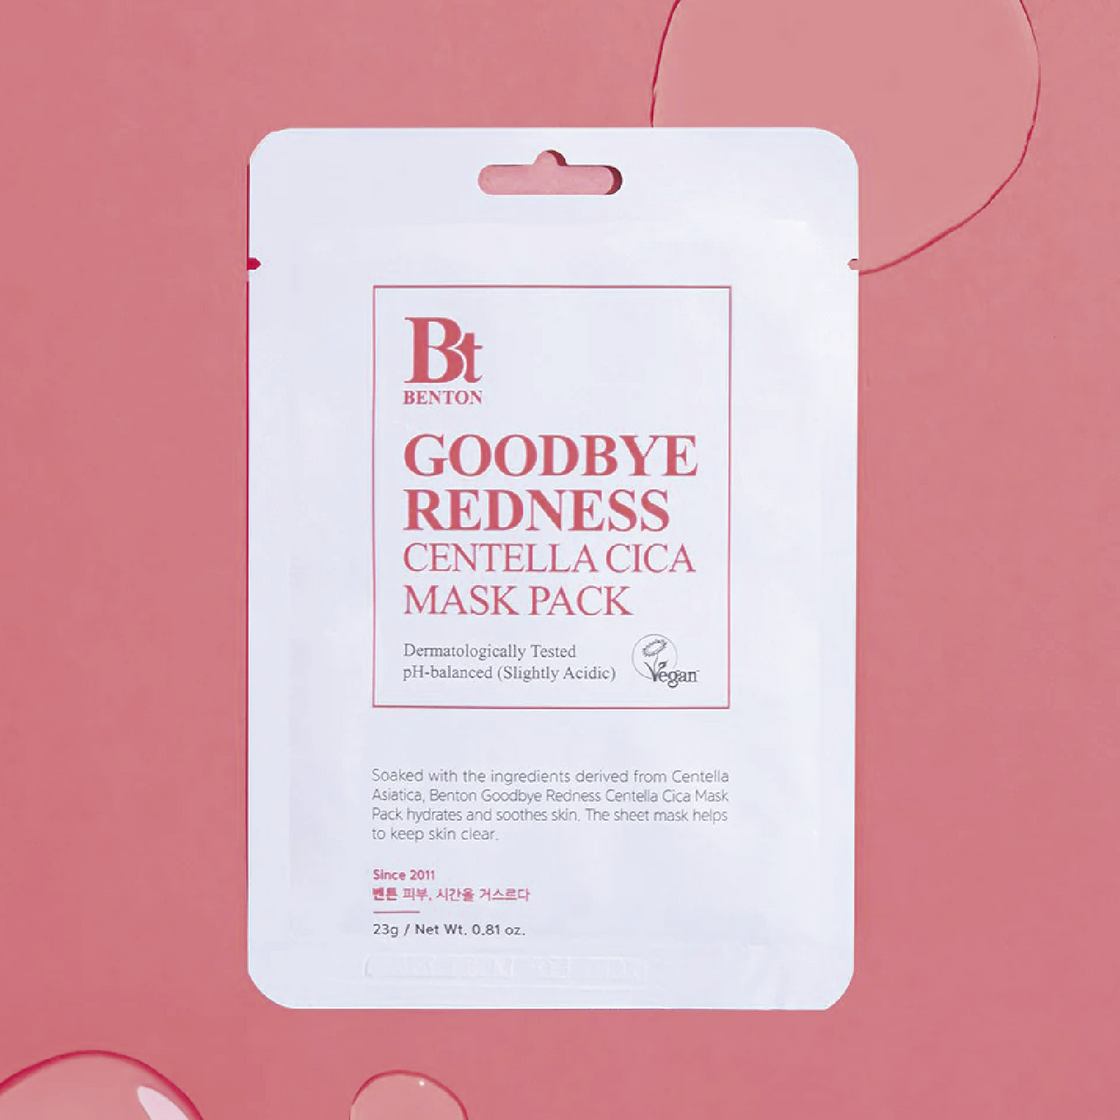 Benton | Goodbye Redness Centella Cica Mask